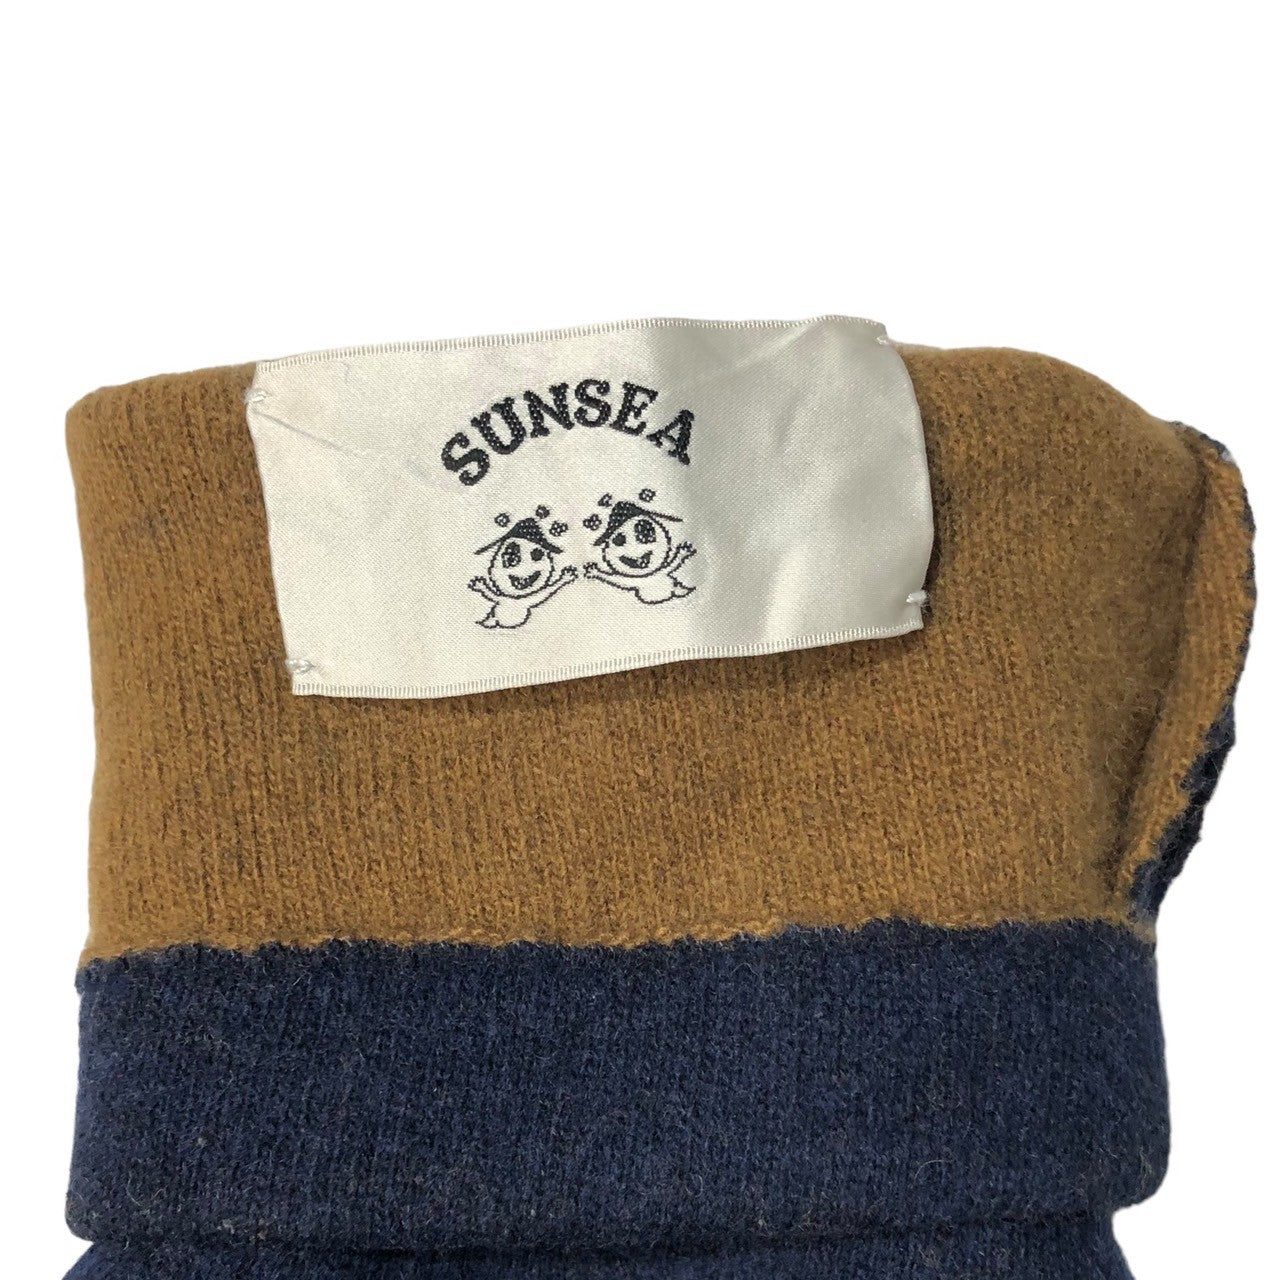 SUNSEA(サンシー) snap button knit jacket スナップボタン ニット ジャケット ネイビー×ブラウン 右肩ホツレ(穴)有